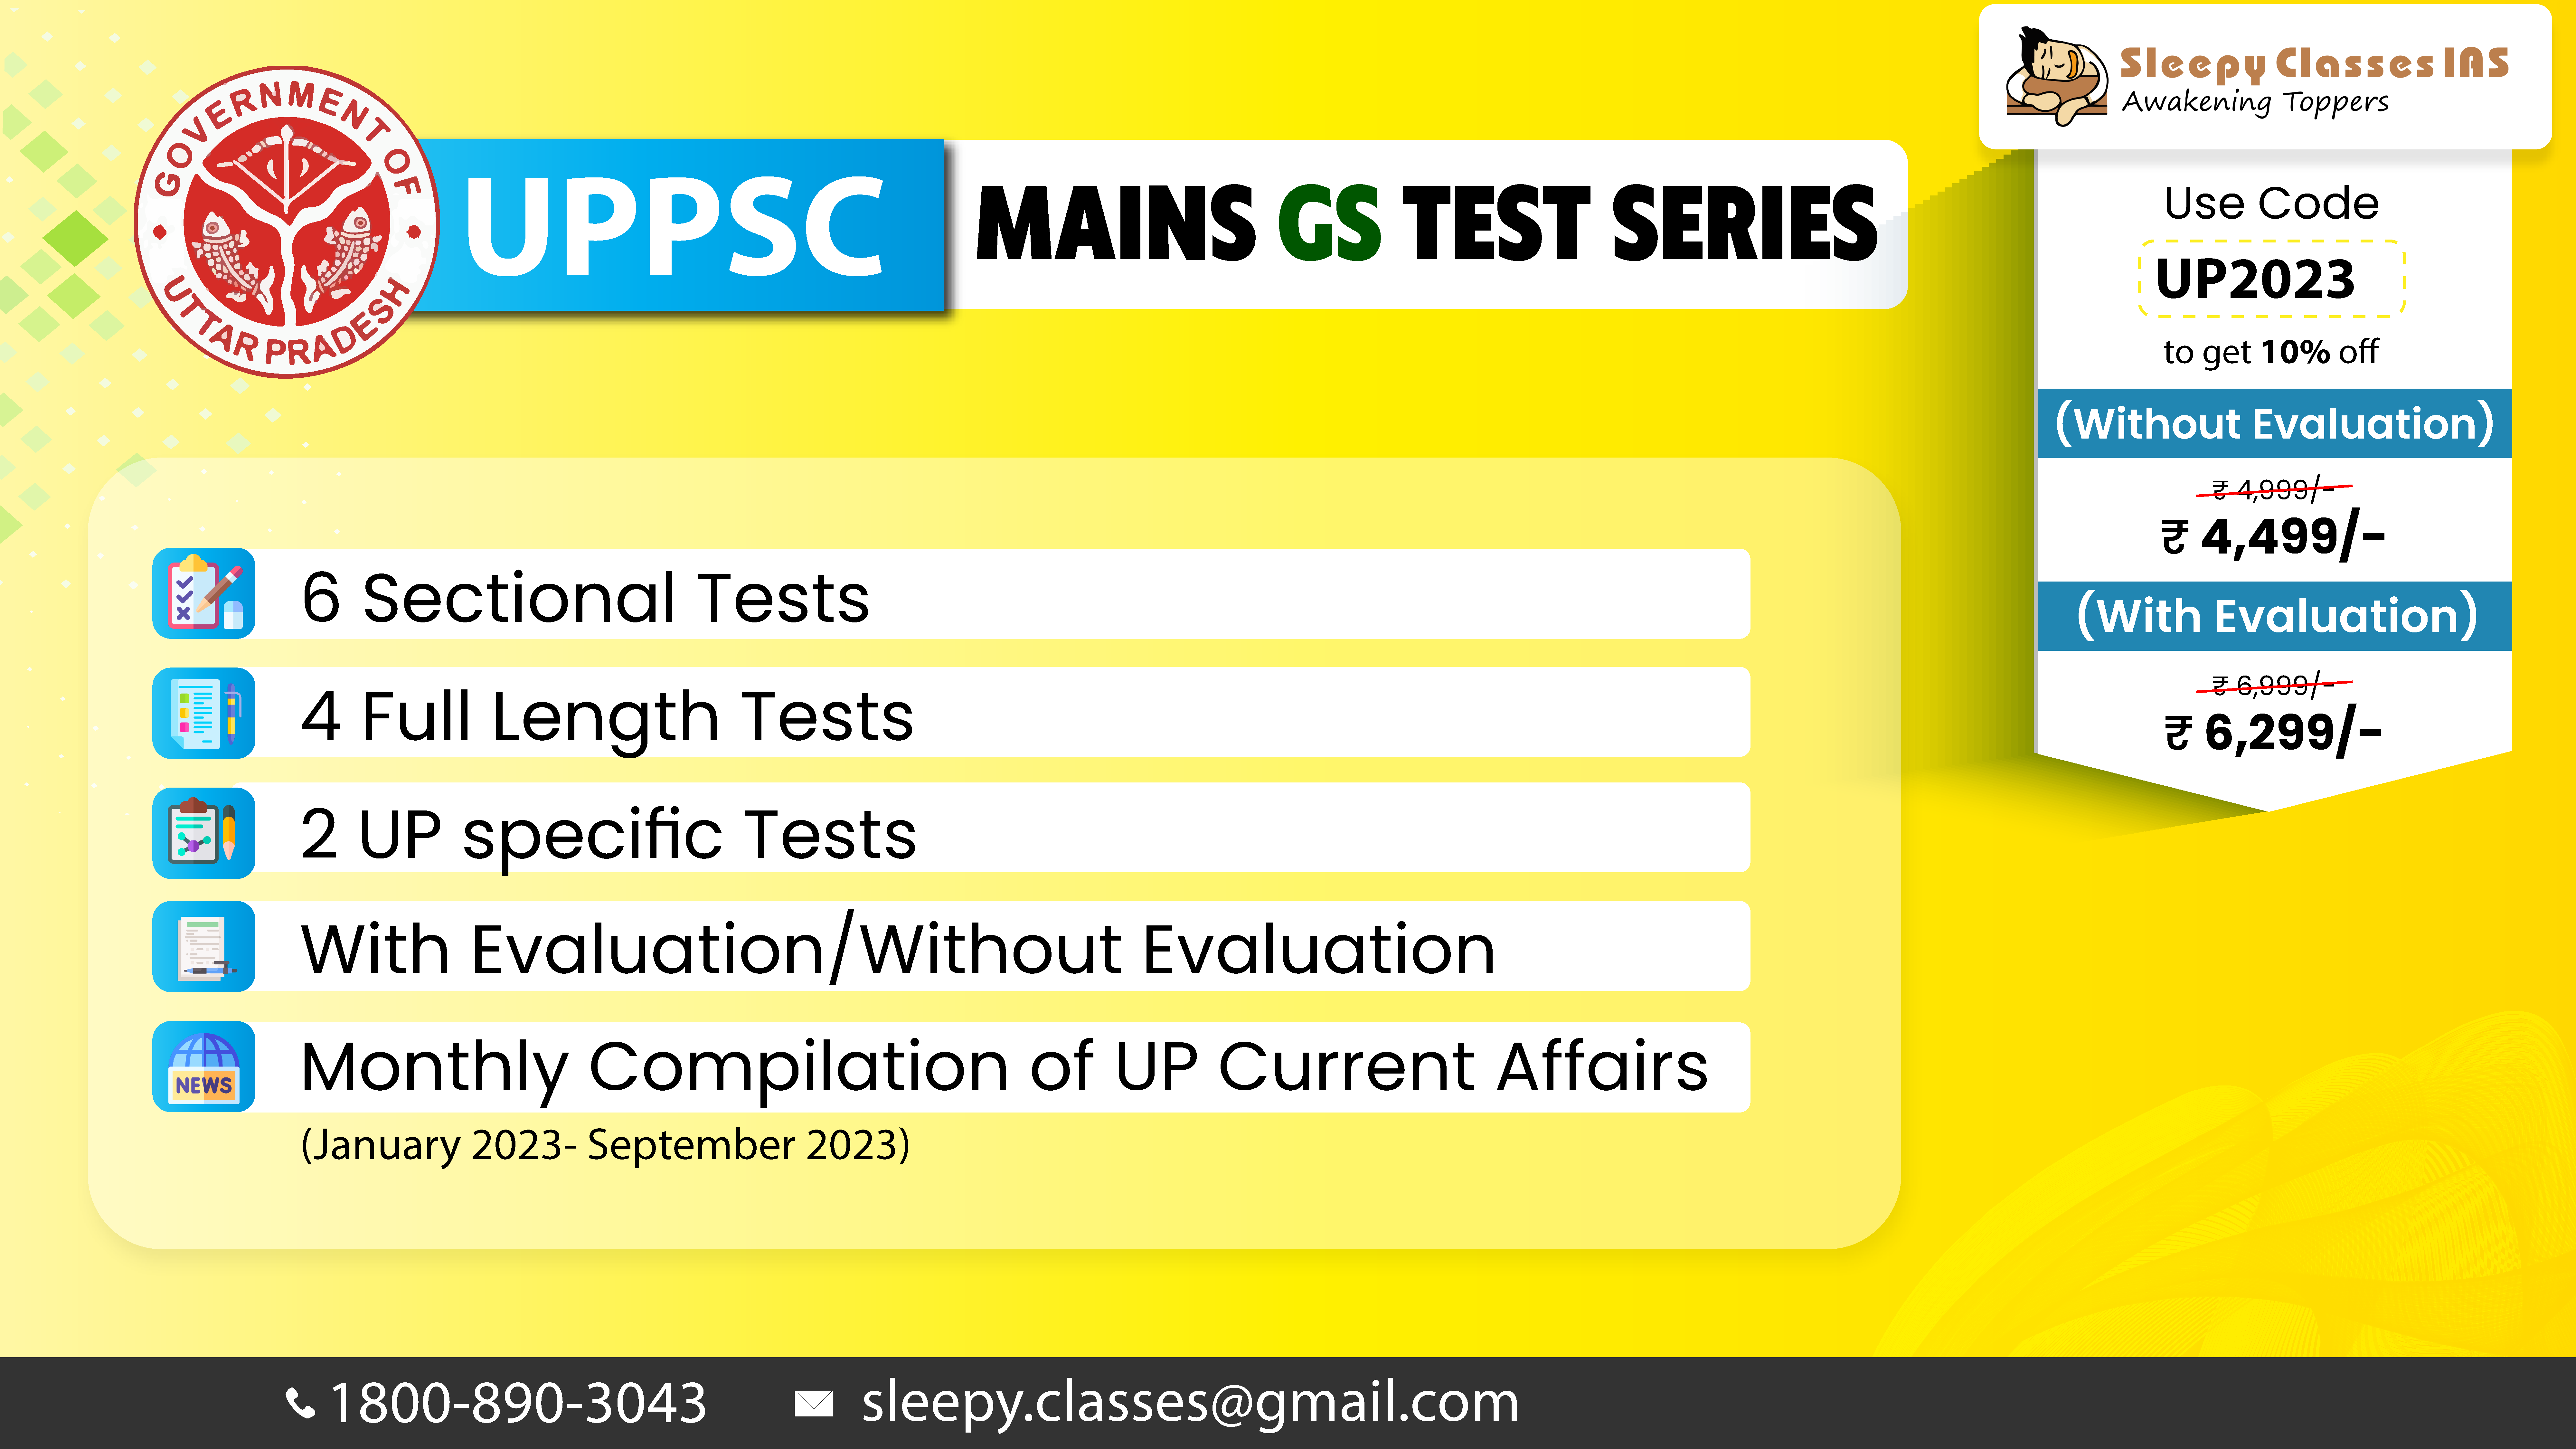 PPT Creative UPPSC Mains GS Test Series 03 03